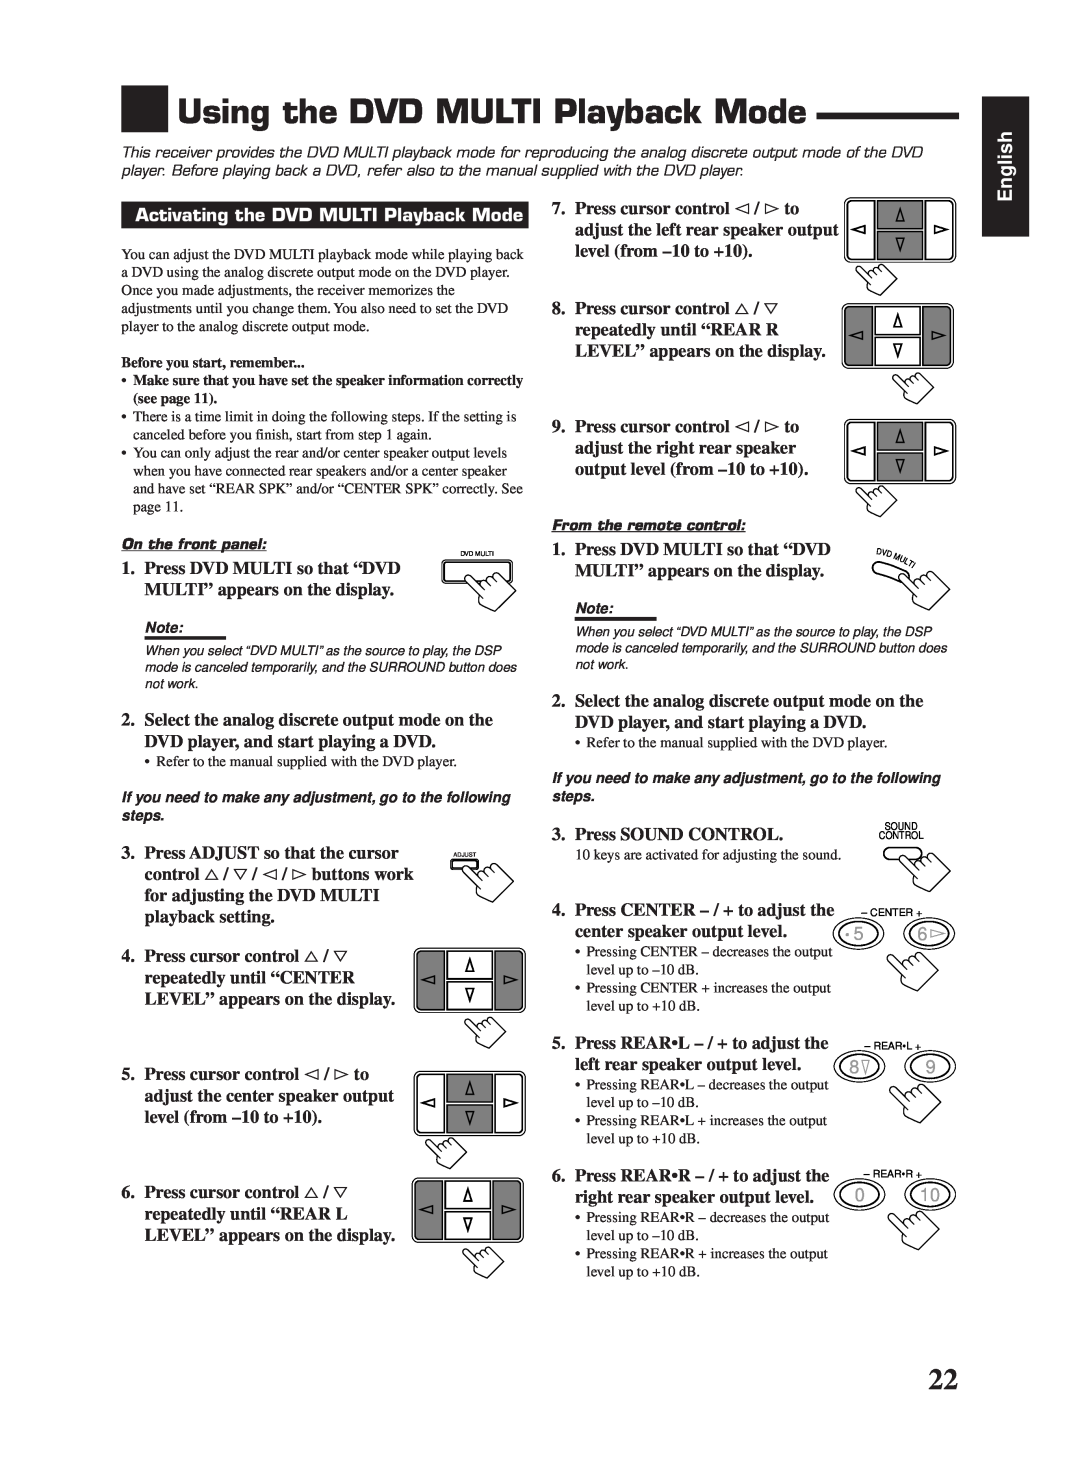 JVC RX-668RBK manual Using the DVD MULTI Playback Mode, Activating the DVD MULTI Playback Mode, English 